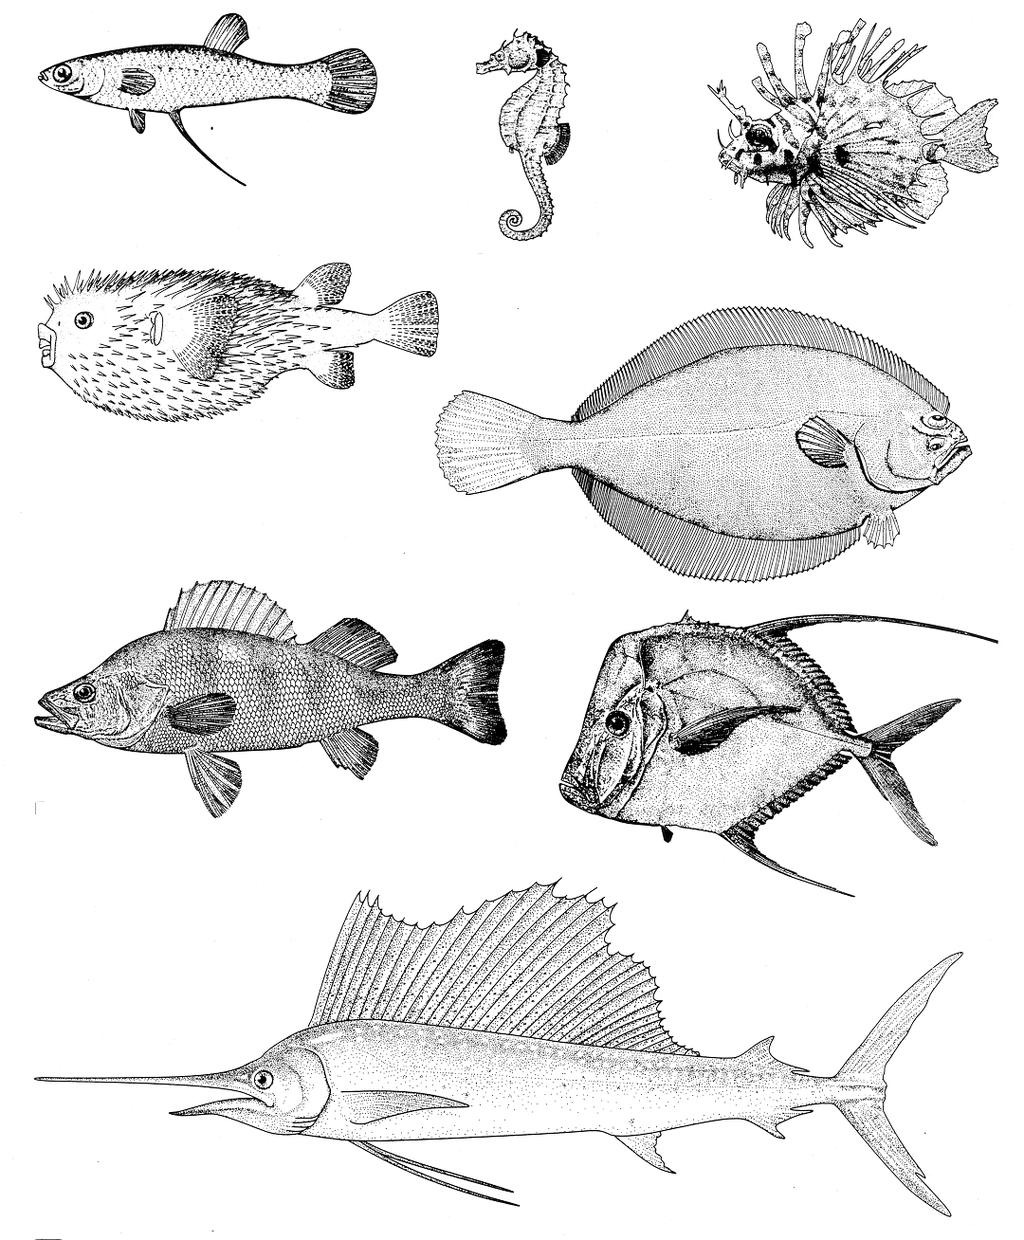 Basal vertebrate heart (fish) is/was composed primarily of spongy myocardium.